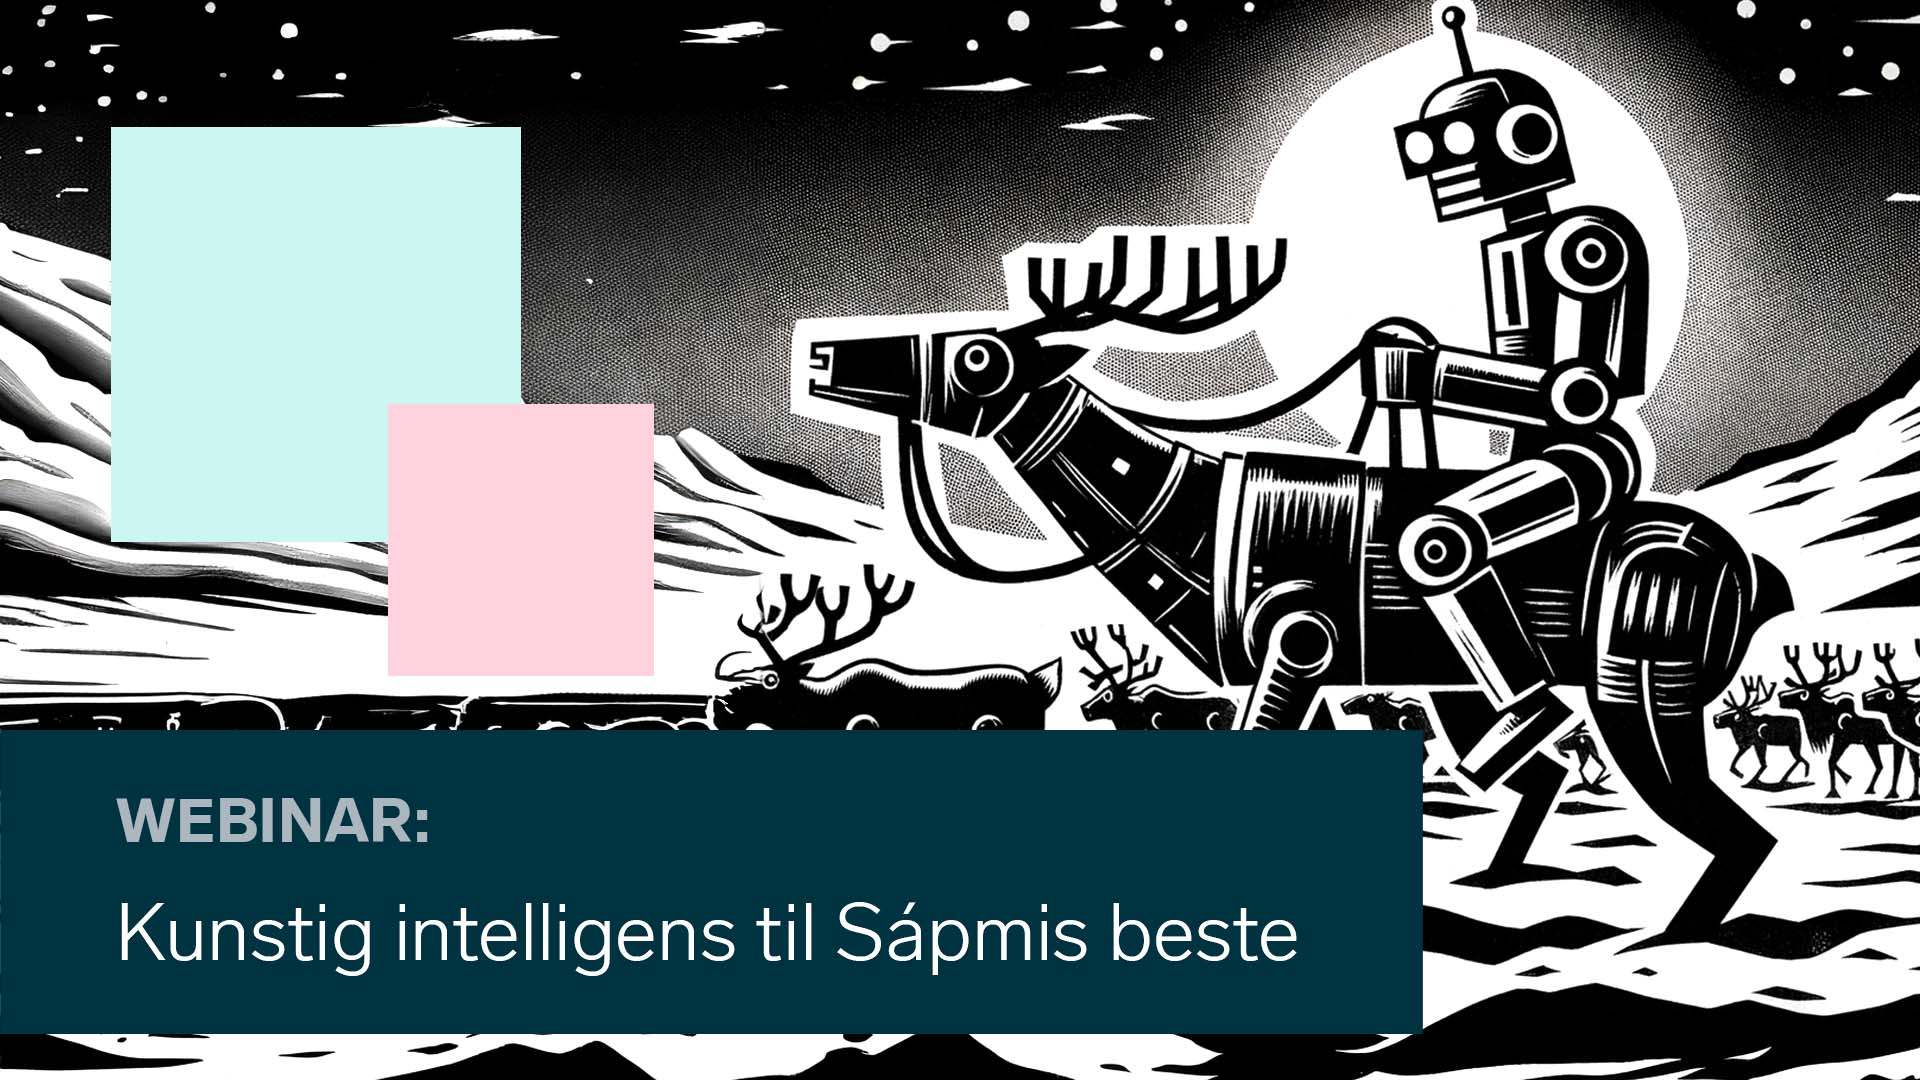 Webinar: The best artificial intelligence for Sápmi